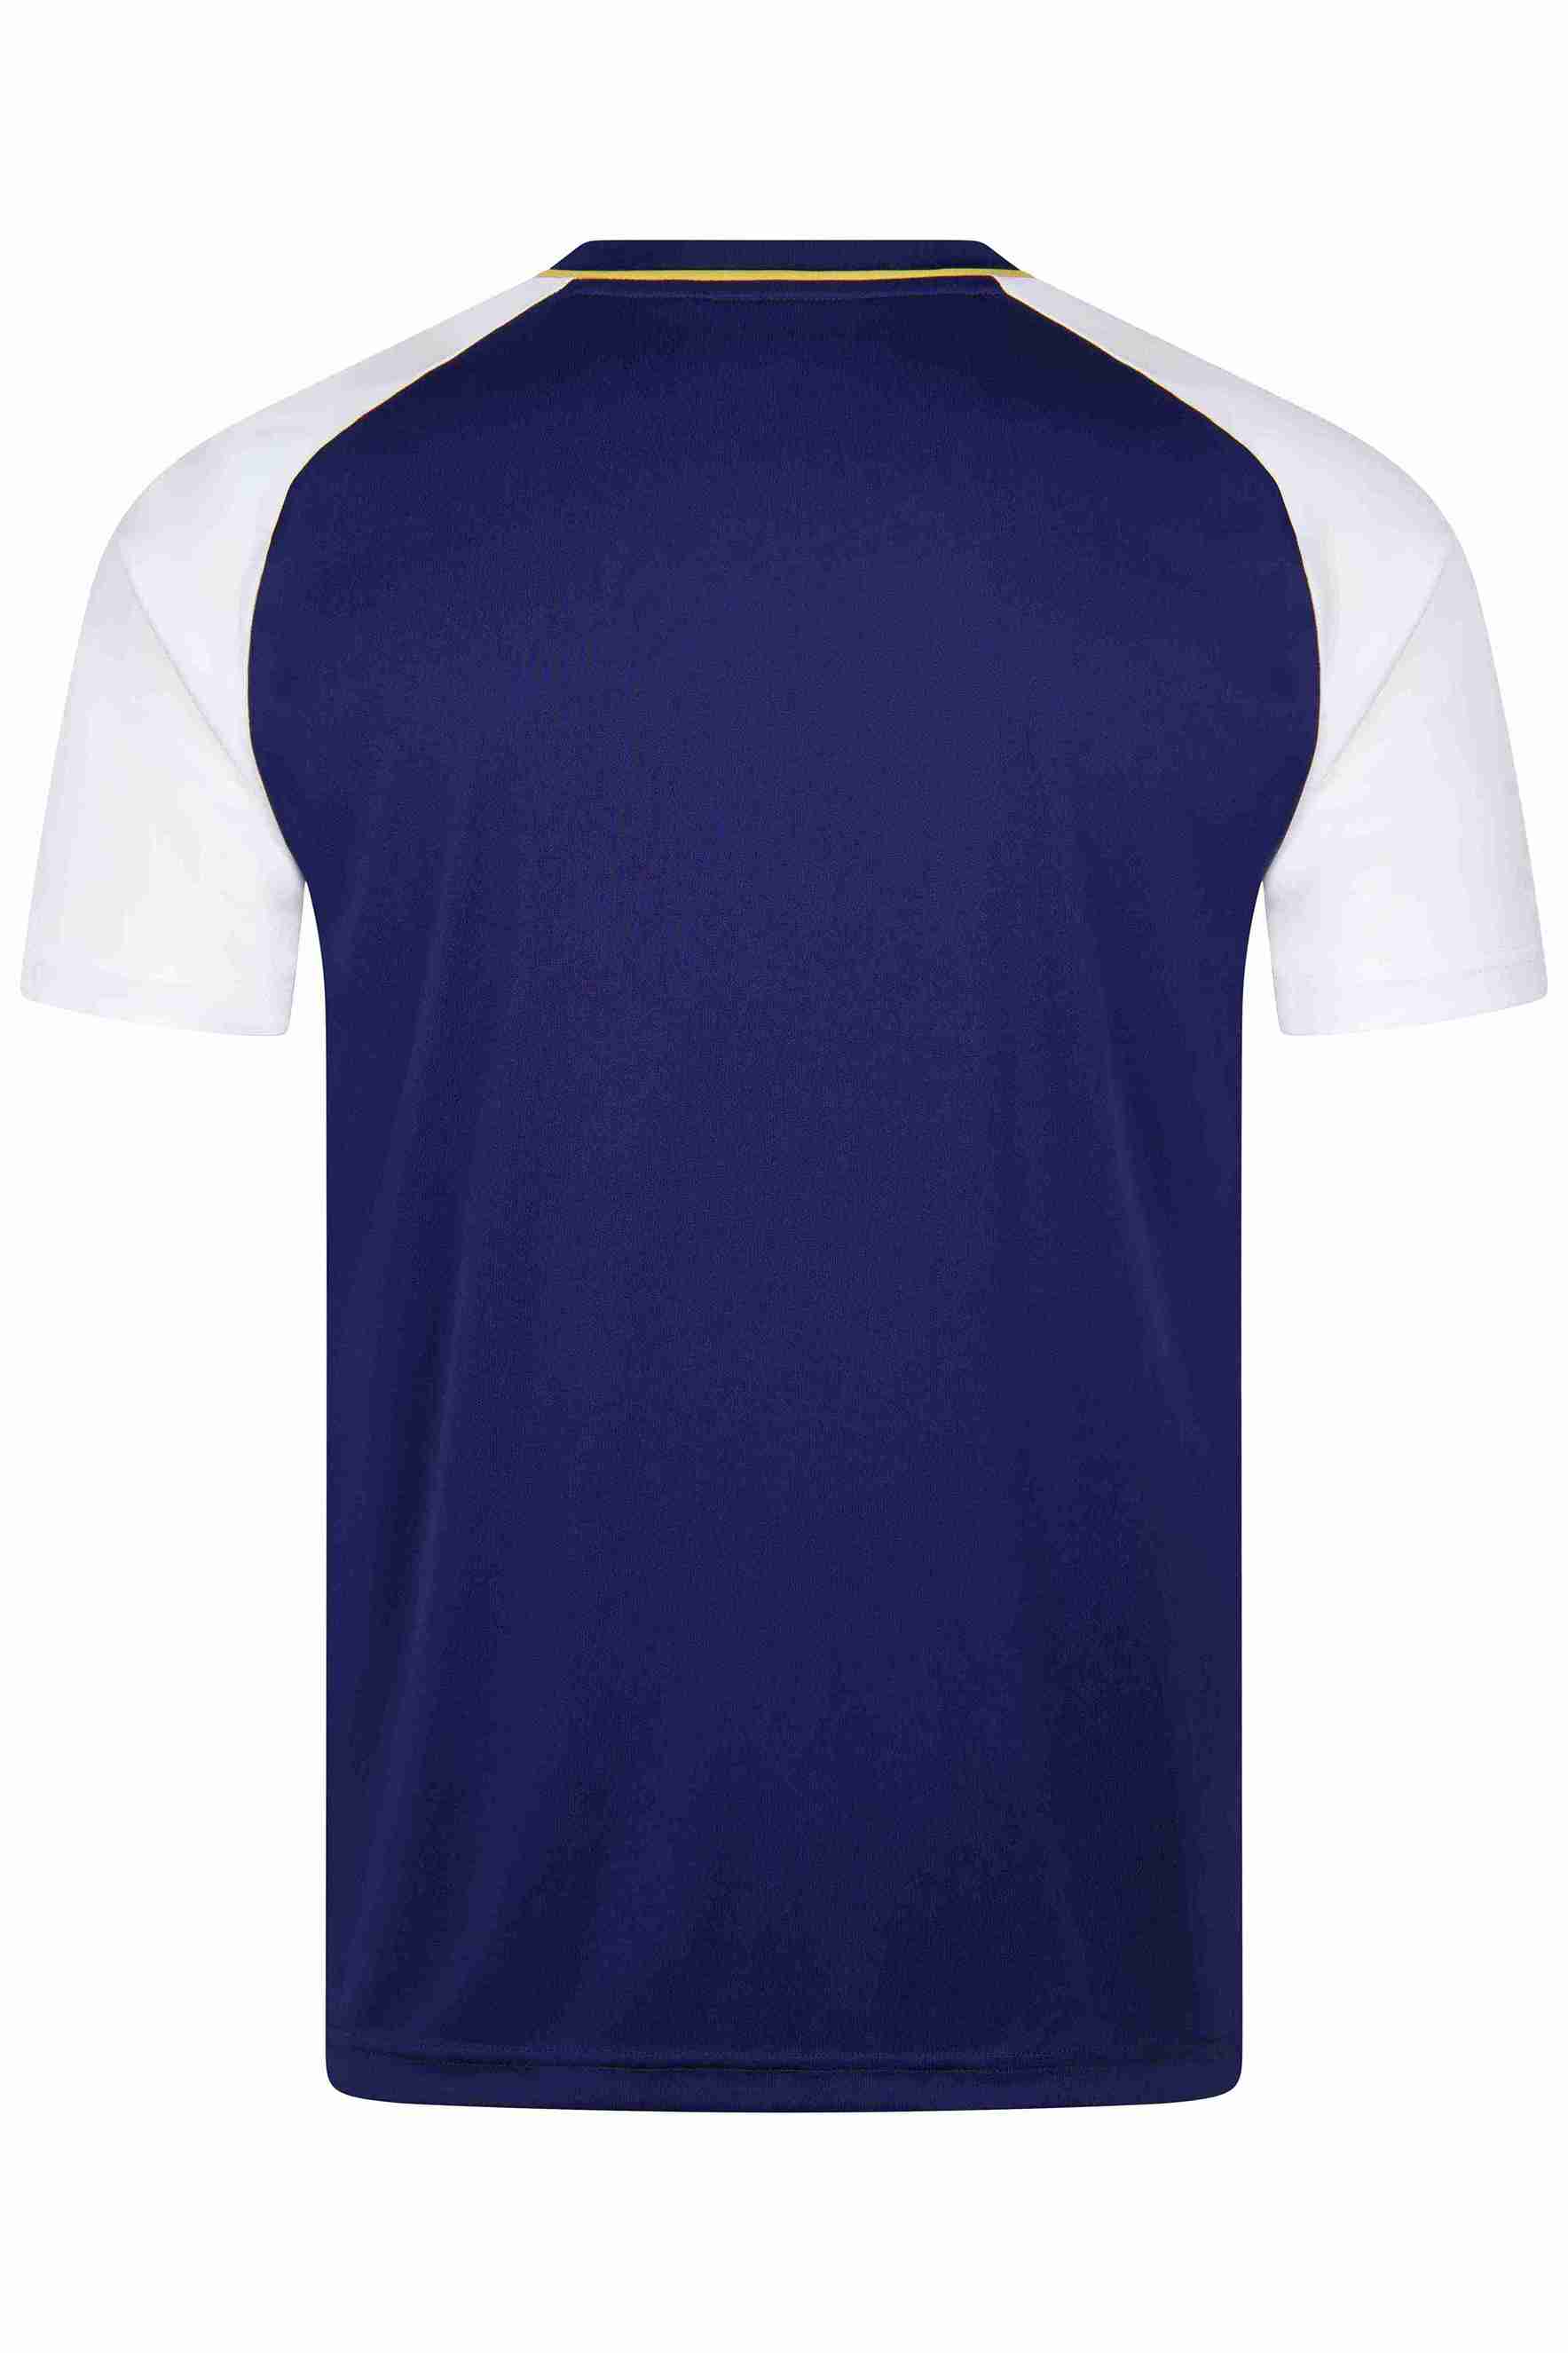 VICTOR T-Shirt T-43100B Unisex - Blau/Gold L